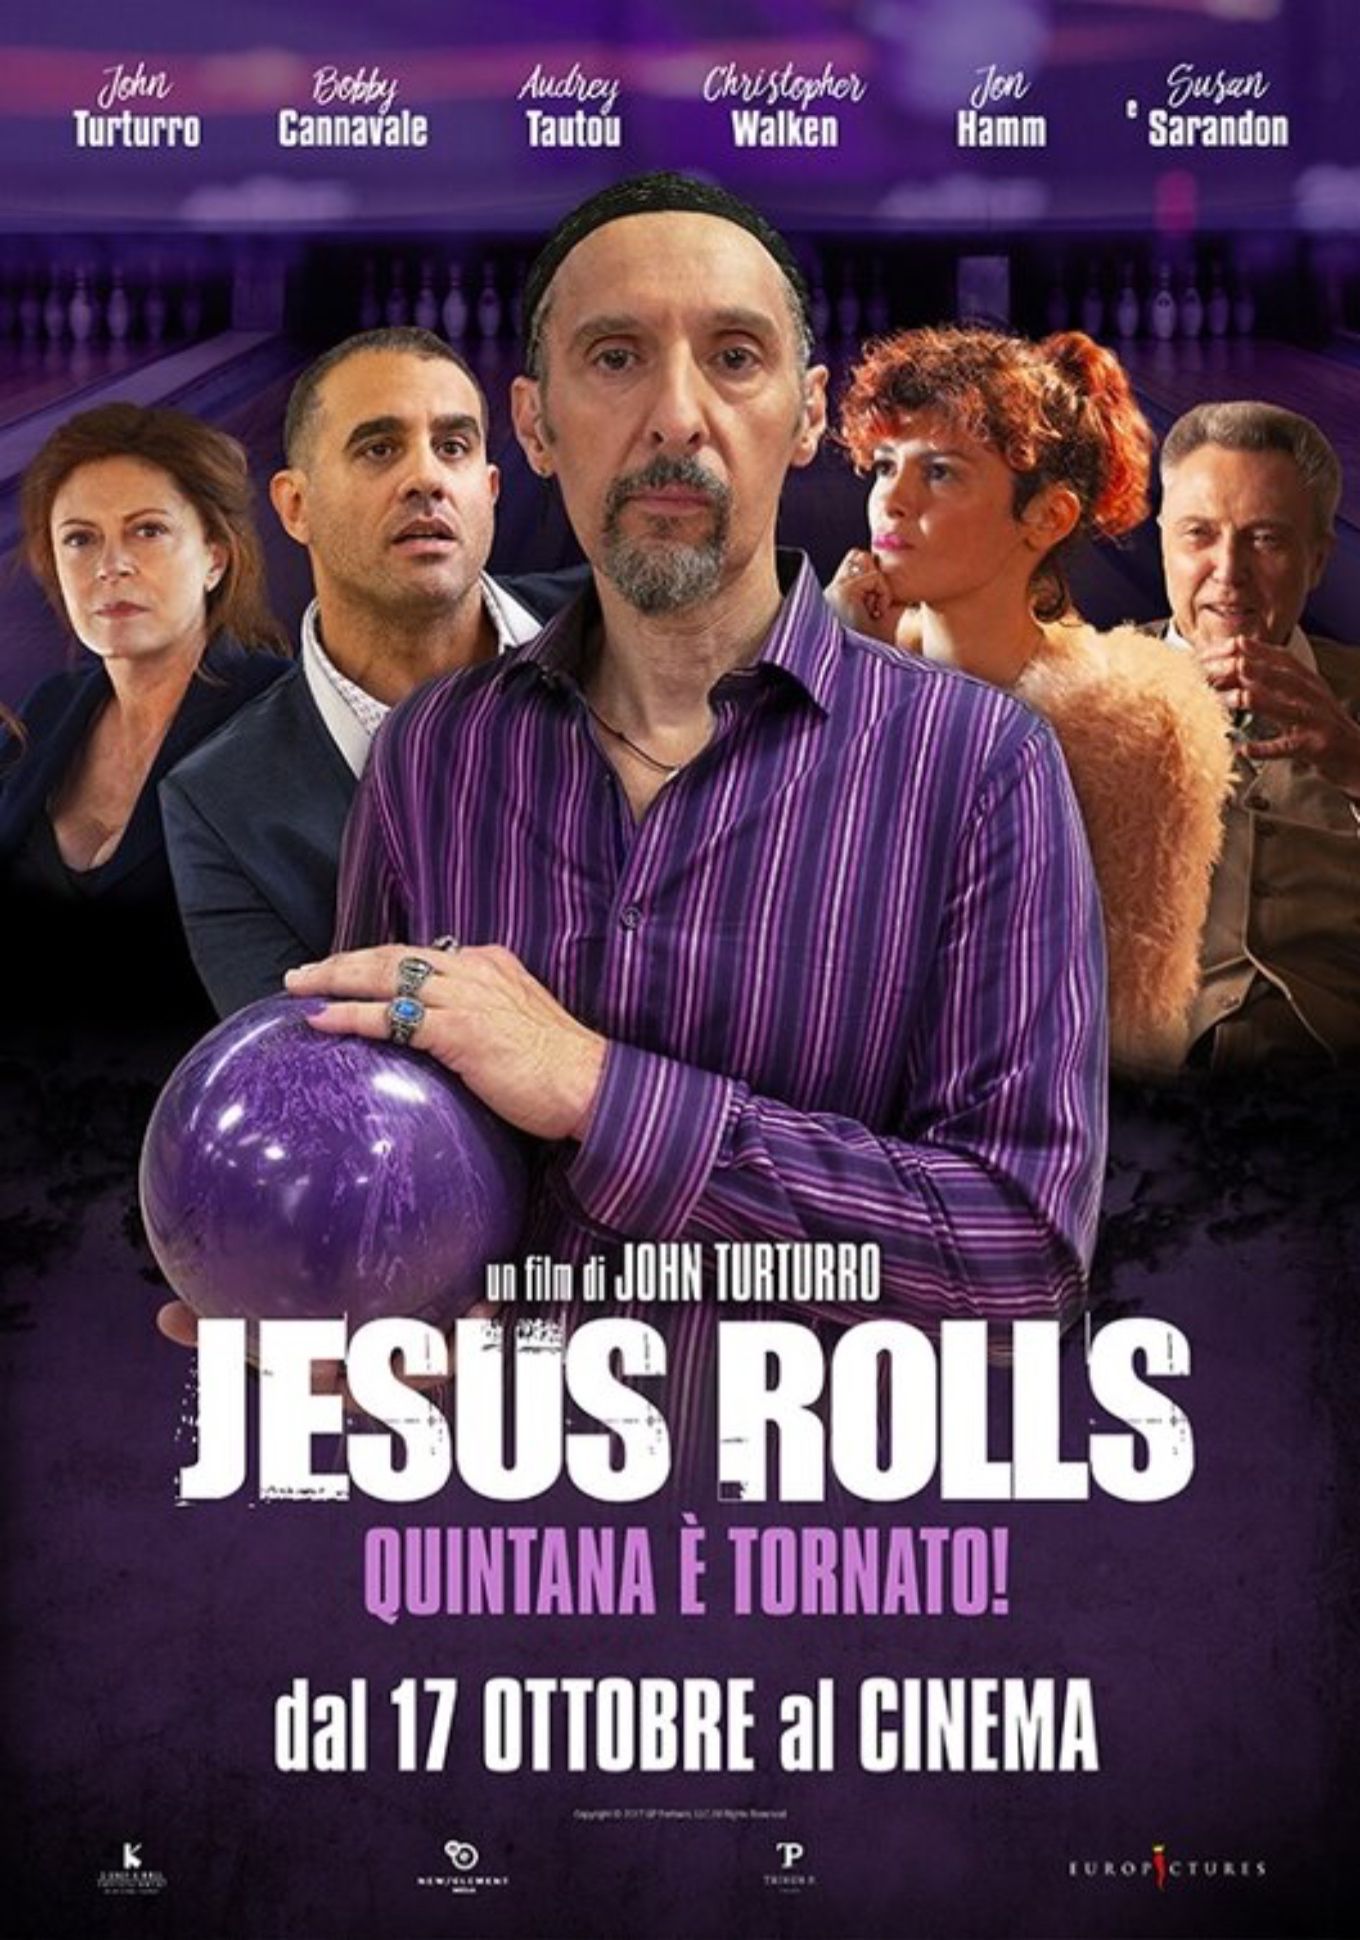 The Jesus Rolls poster #2